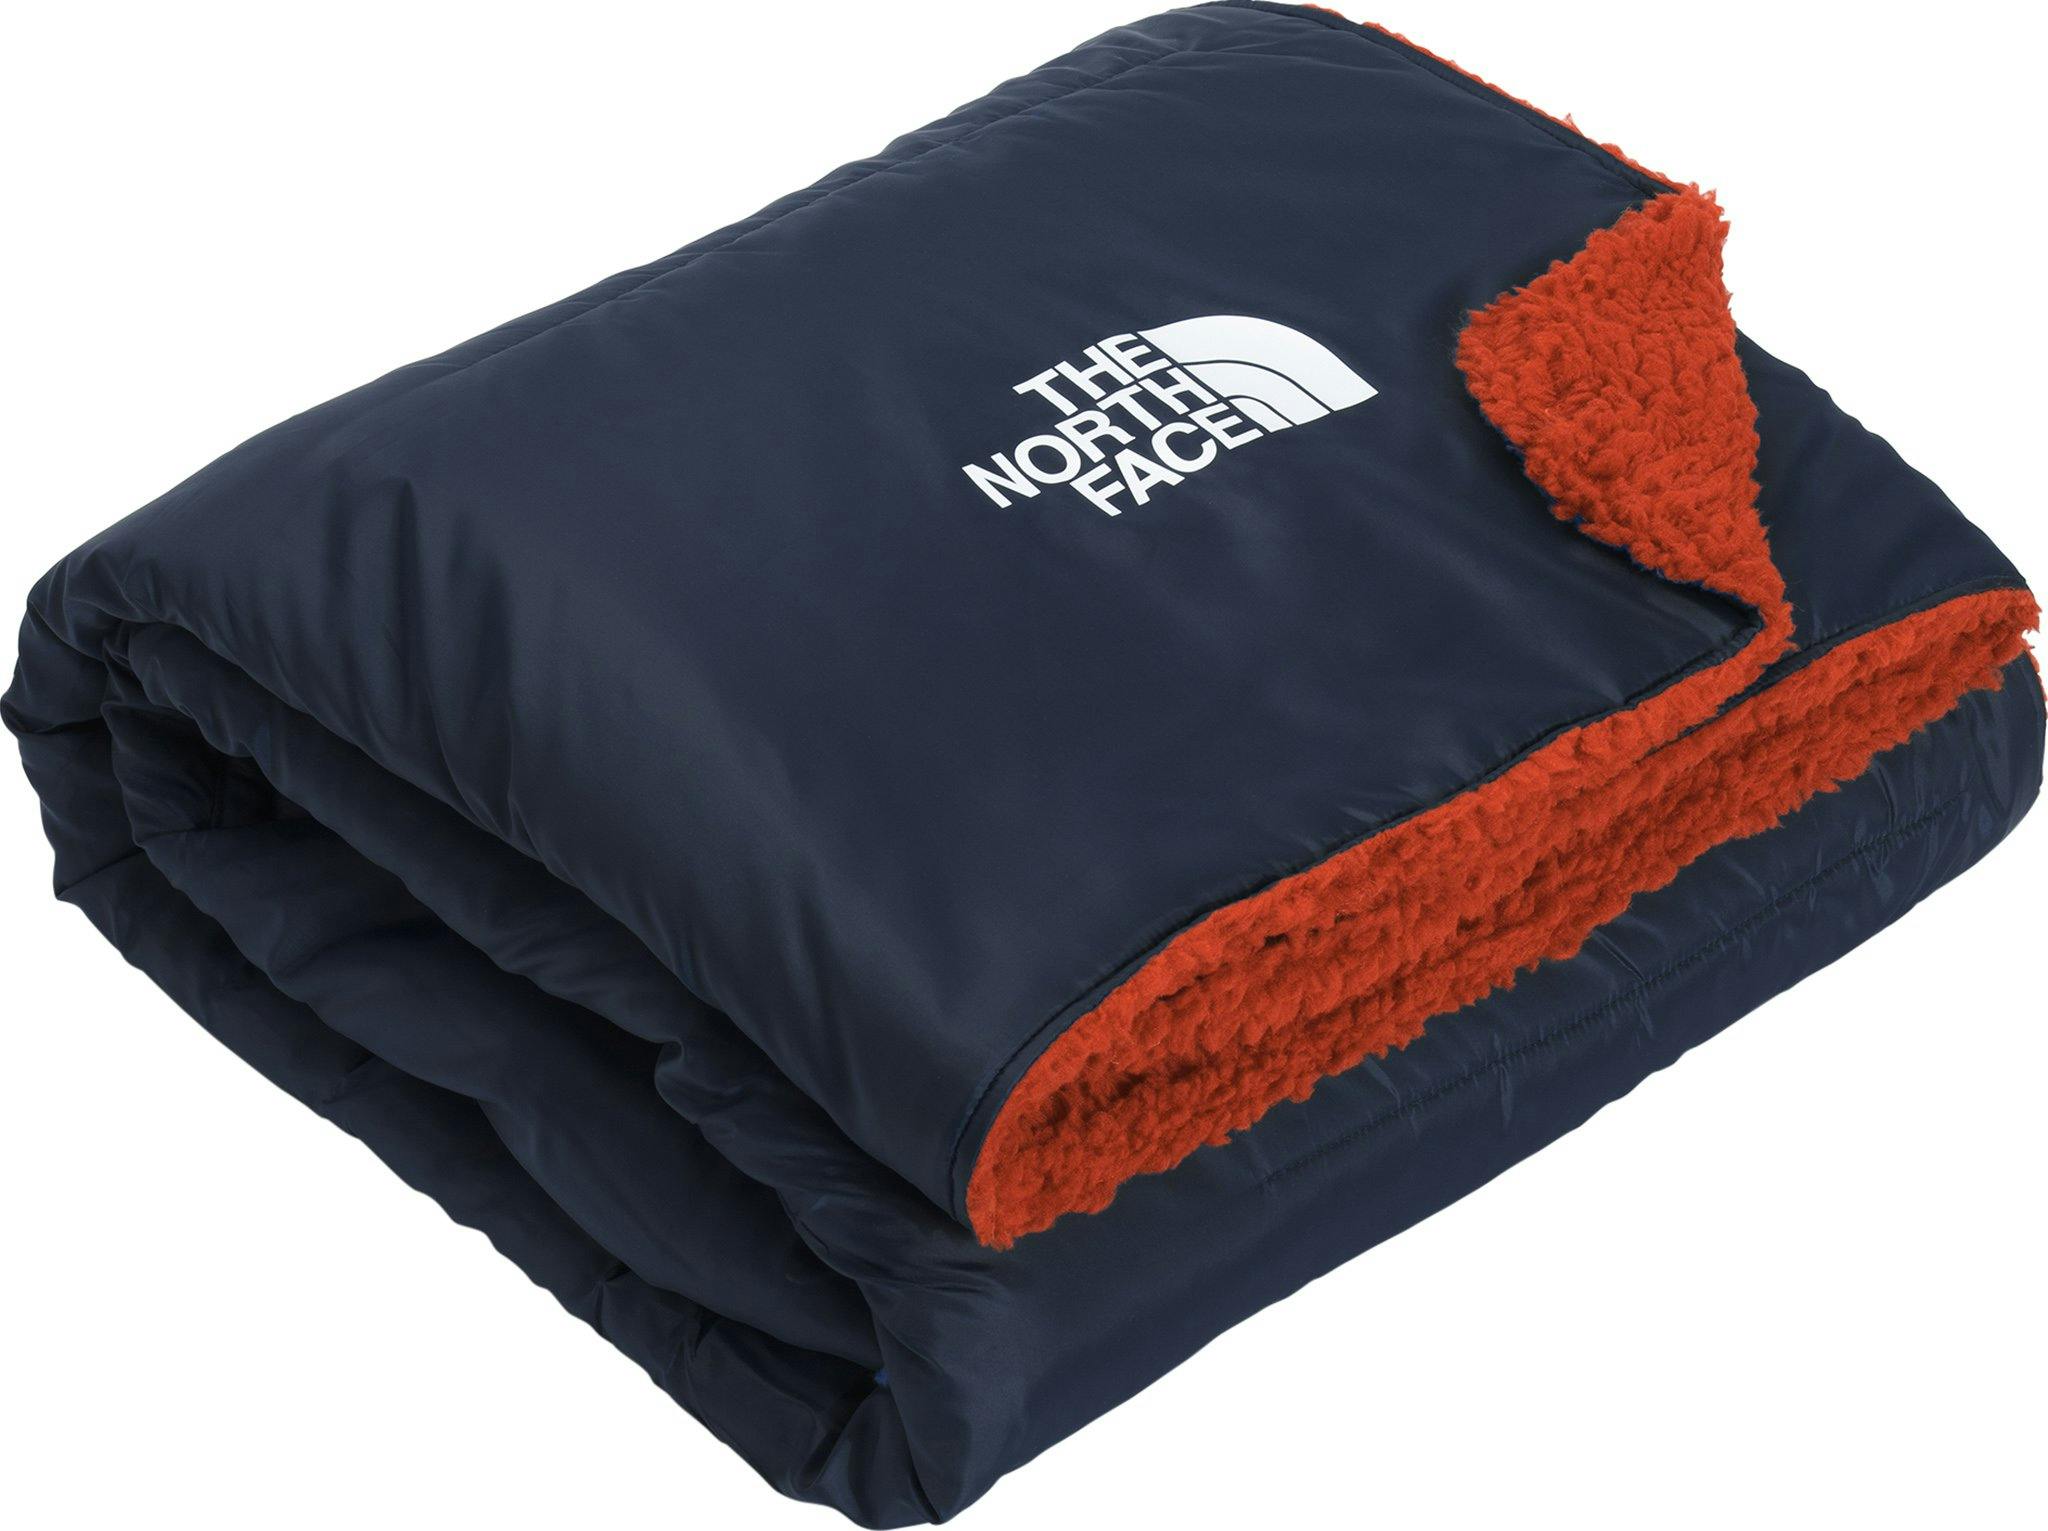 Product image for Wawona Poncho Blanket